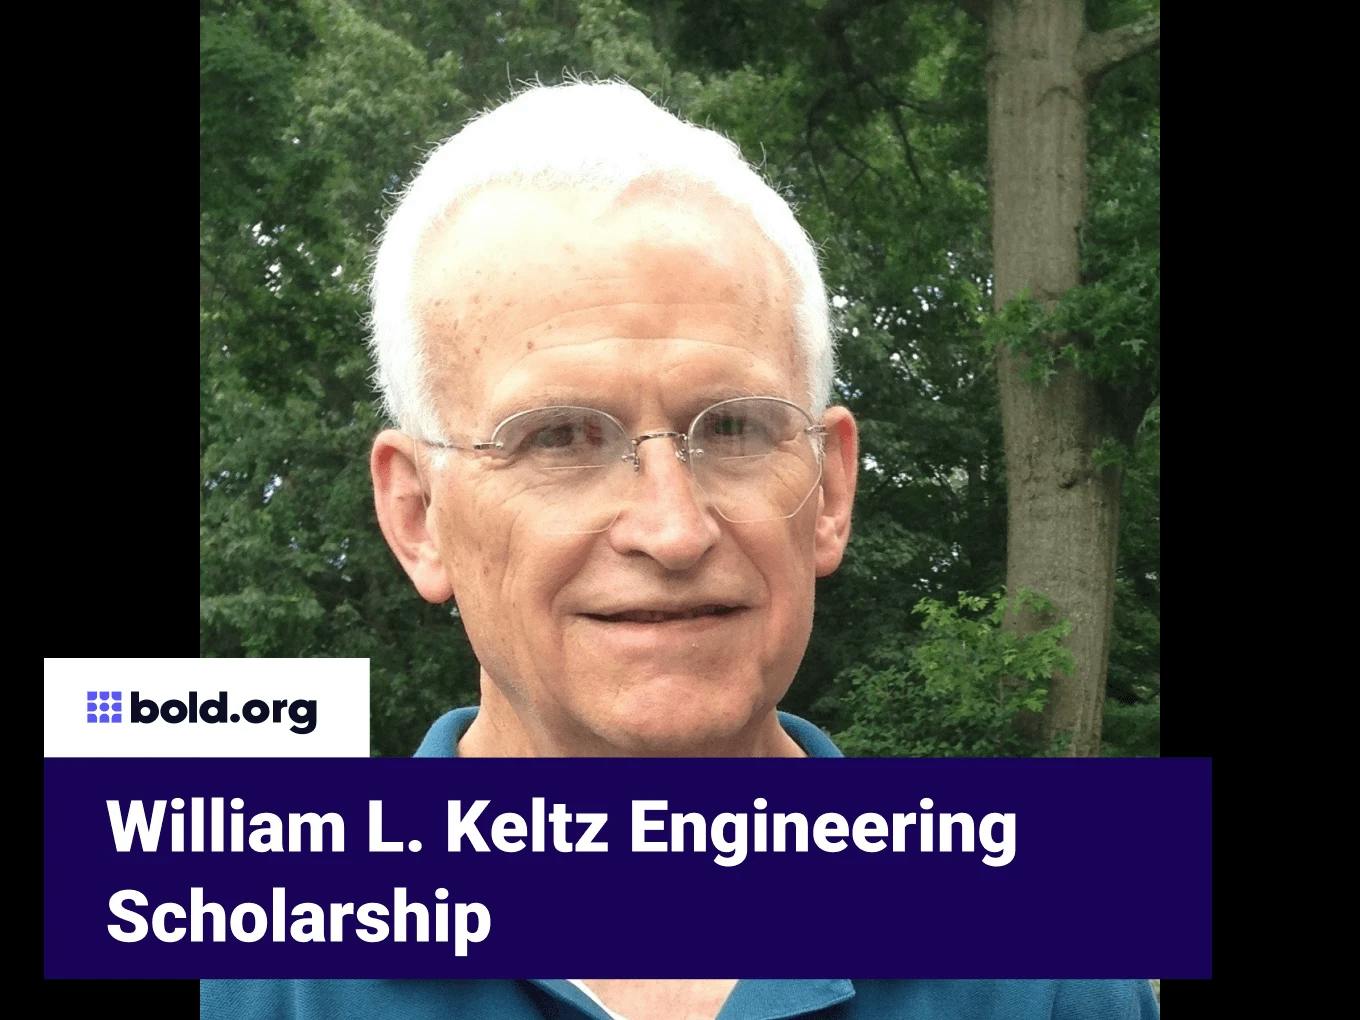 William L. Keltz Engineering Scholarship